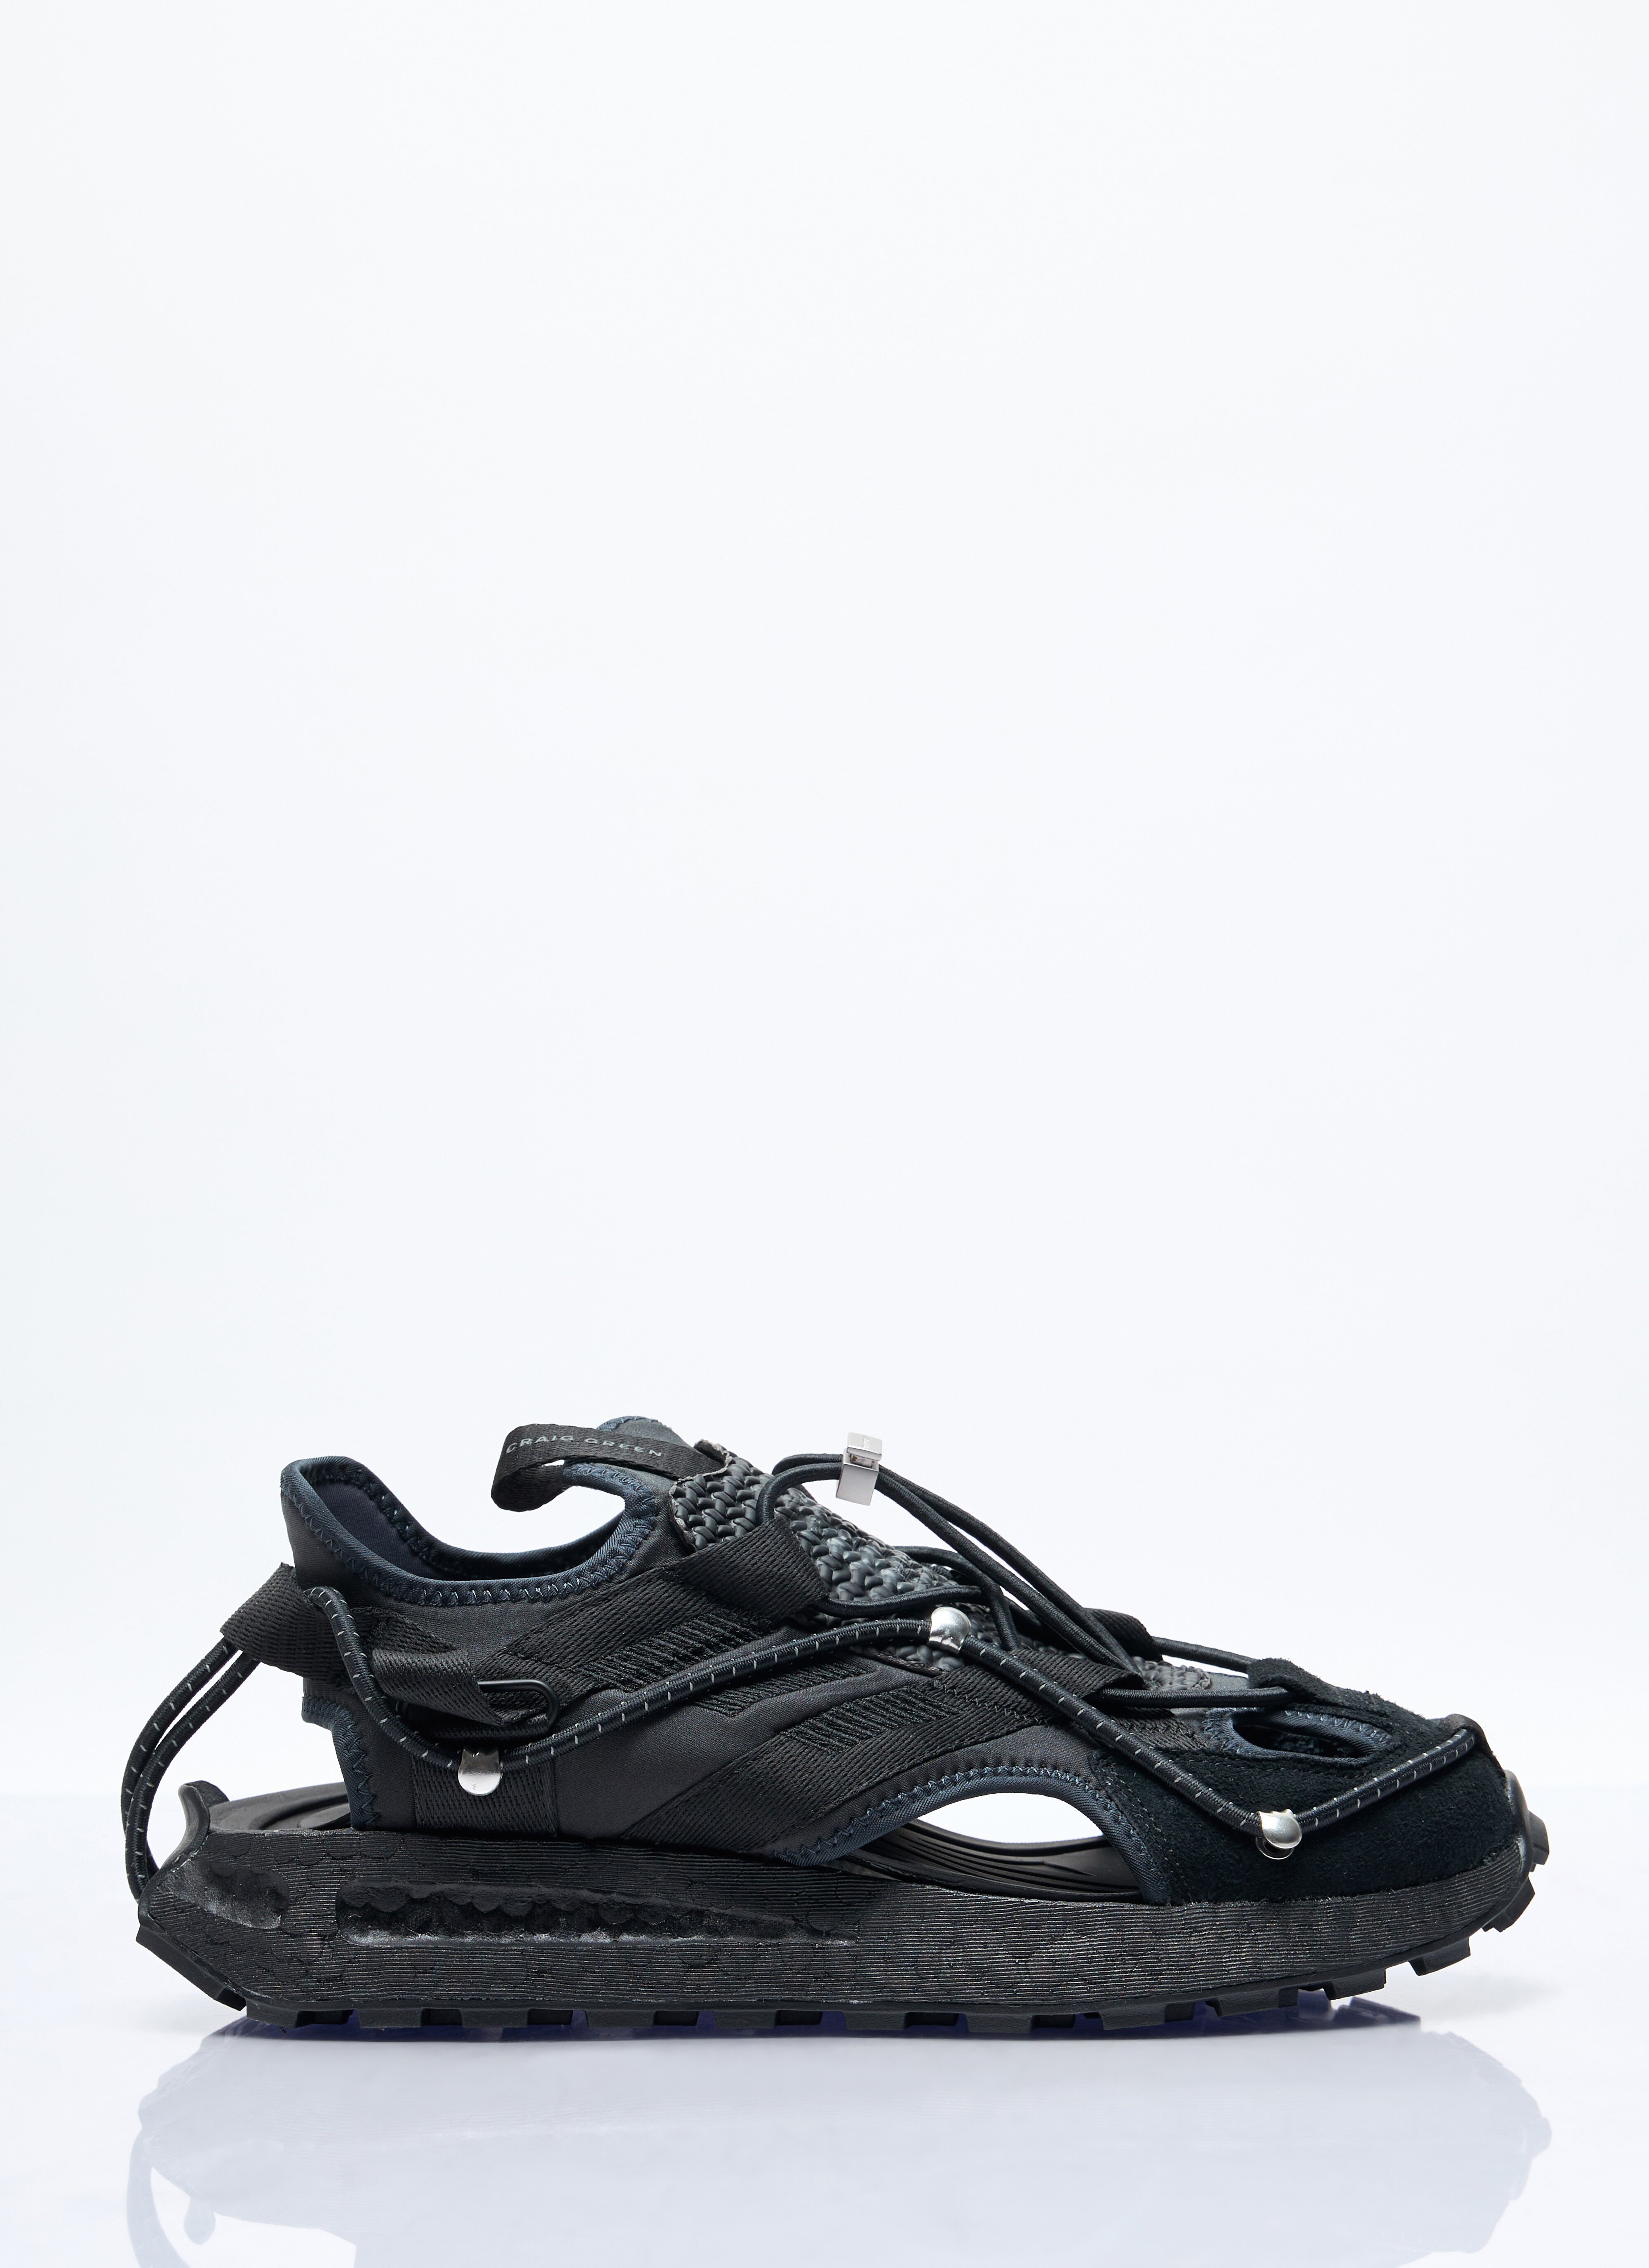 adidas x DINGYUN ZHANG CG Retropy Sneakers Black ady0157001